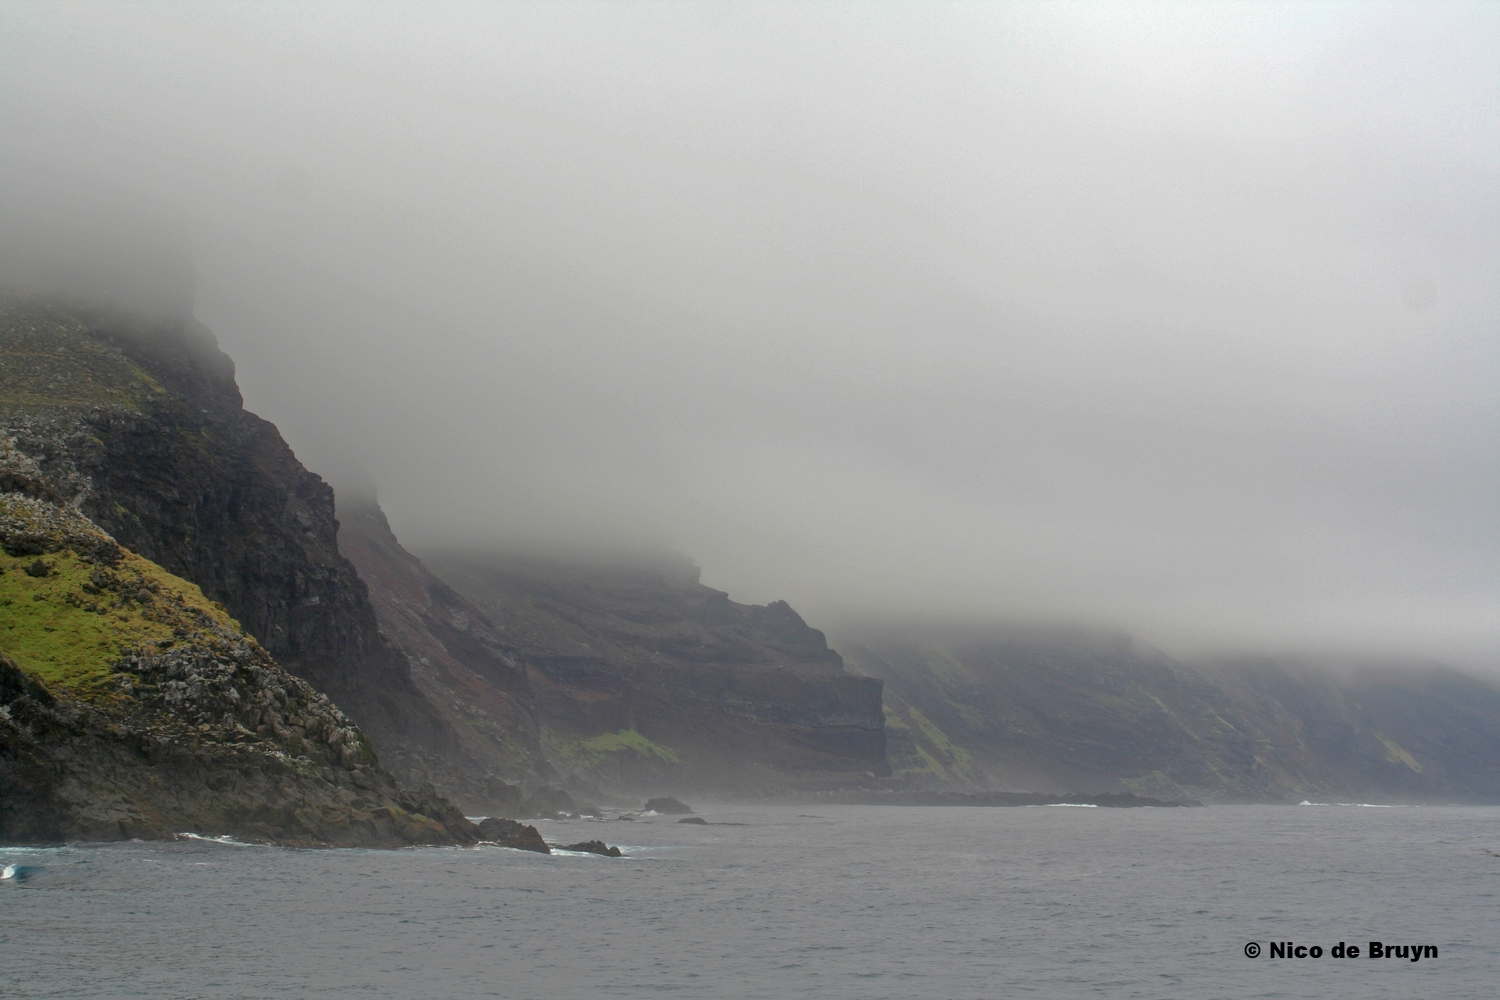  Misty cliffs in Crawford Bay, south coast of Marion Island. Photo credit: Nico de Bruyn 